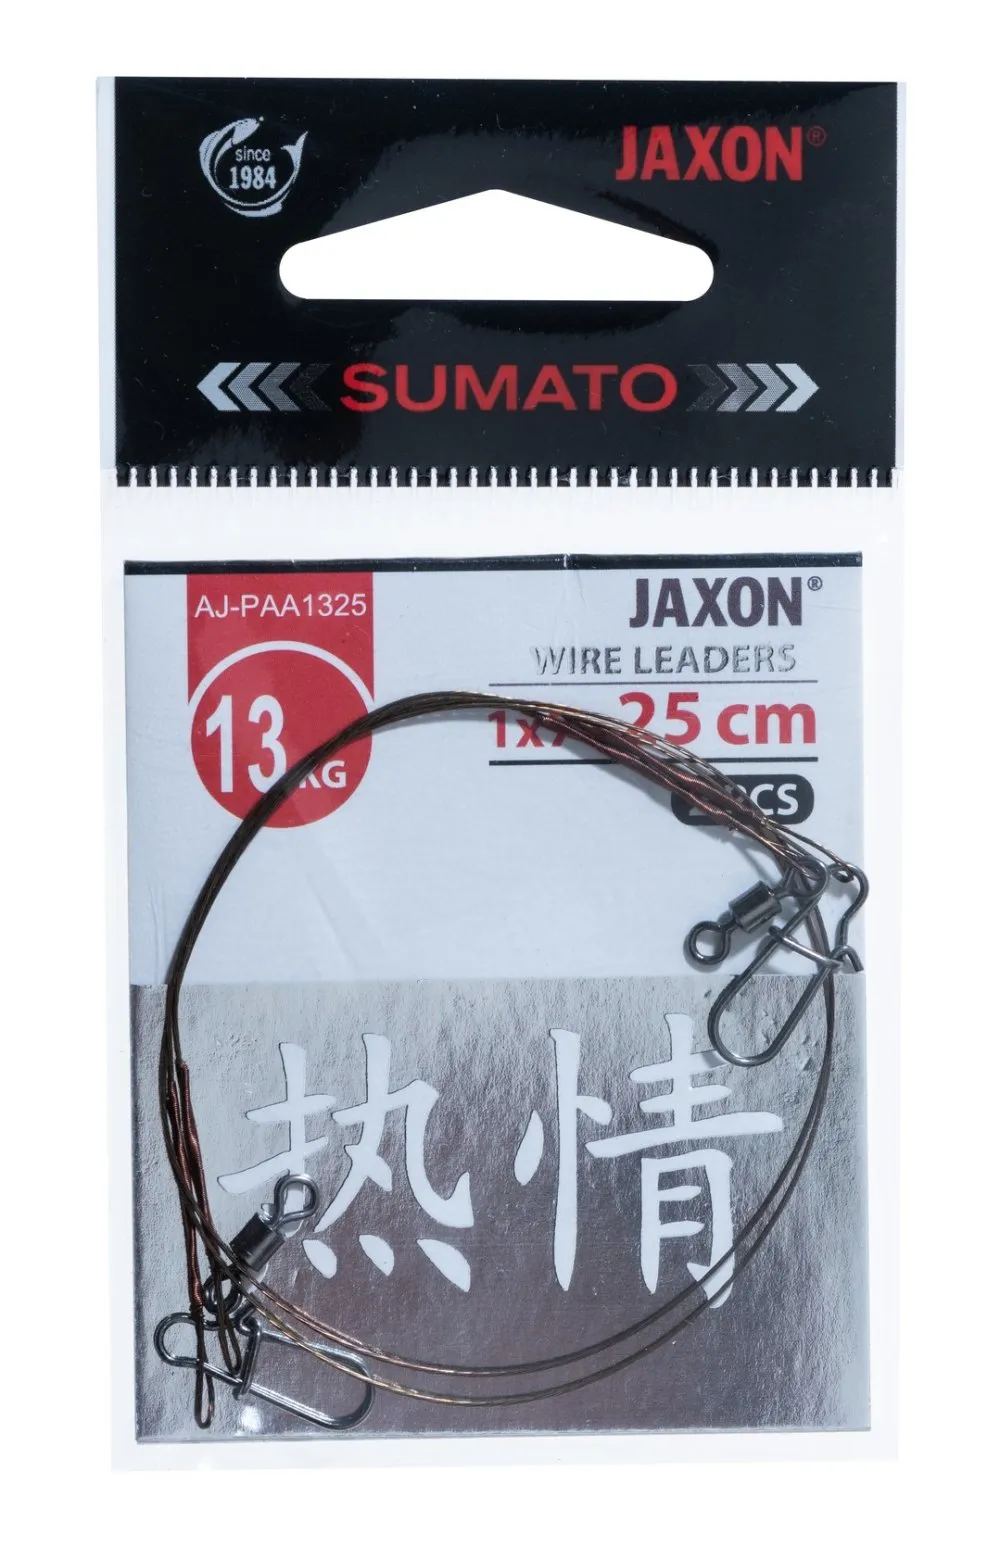 SNECI - Horgász webshop és horgászbolt - JAXON SUMATO WIRE LEADERS 9kg 30cm